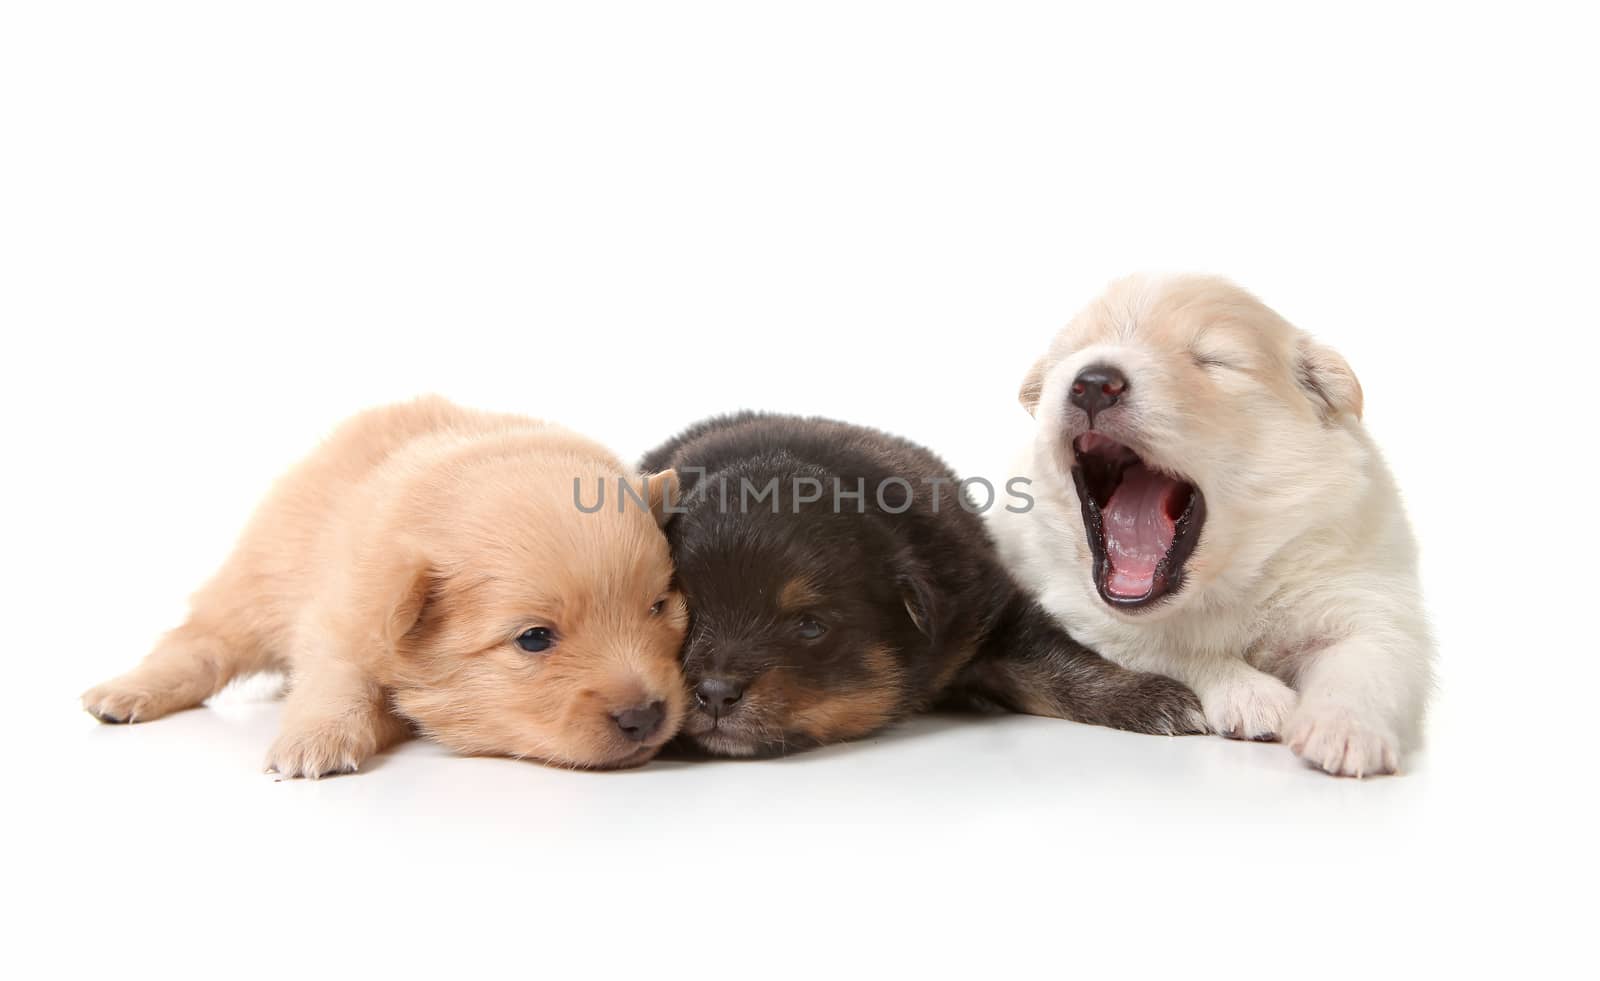 Yawning Sweet and Cuddly Newborn Puppies on White